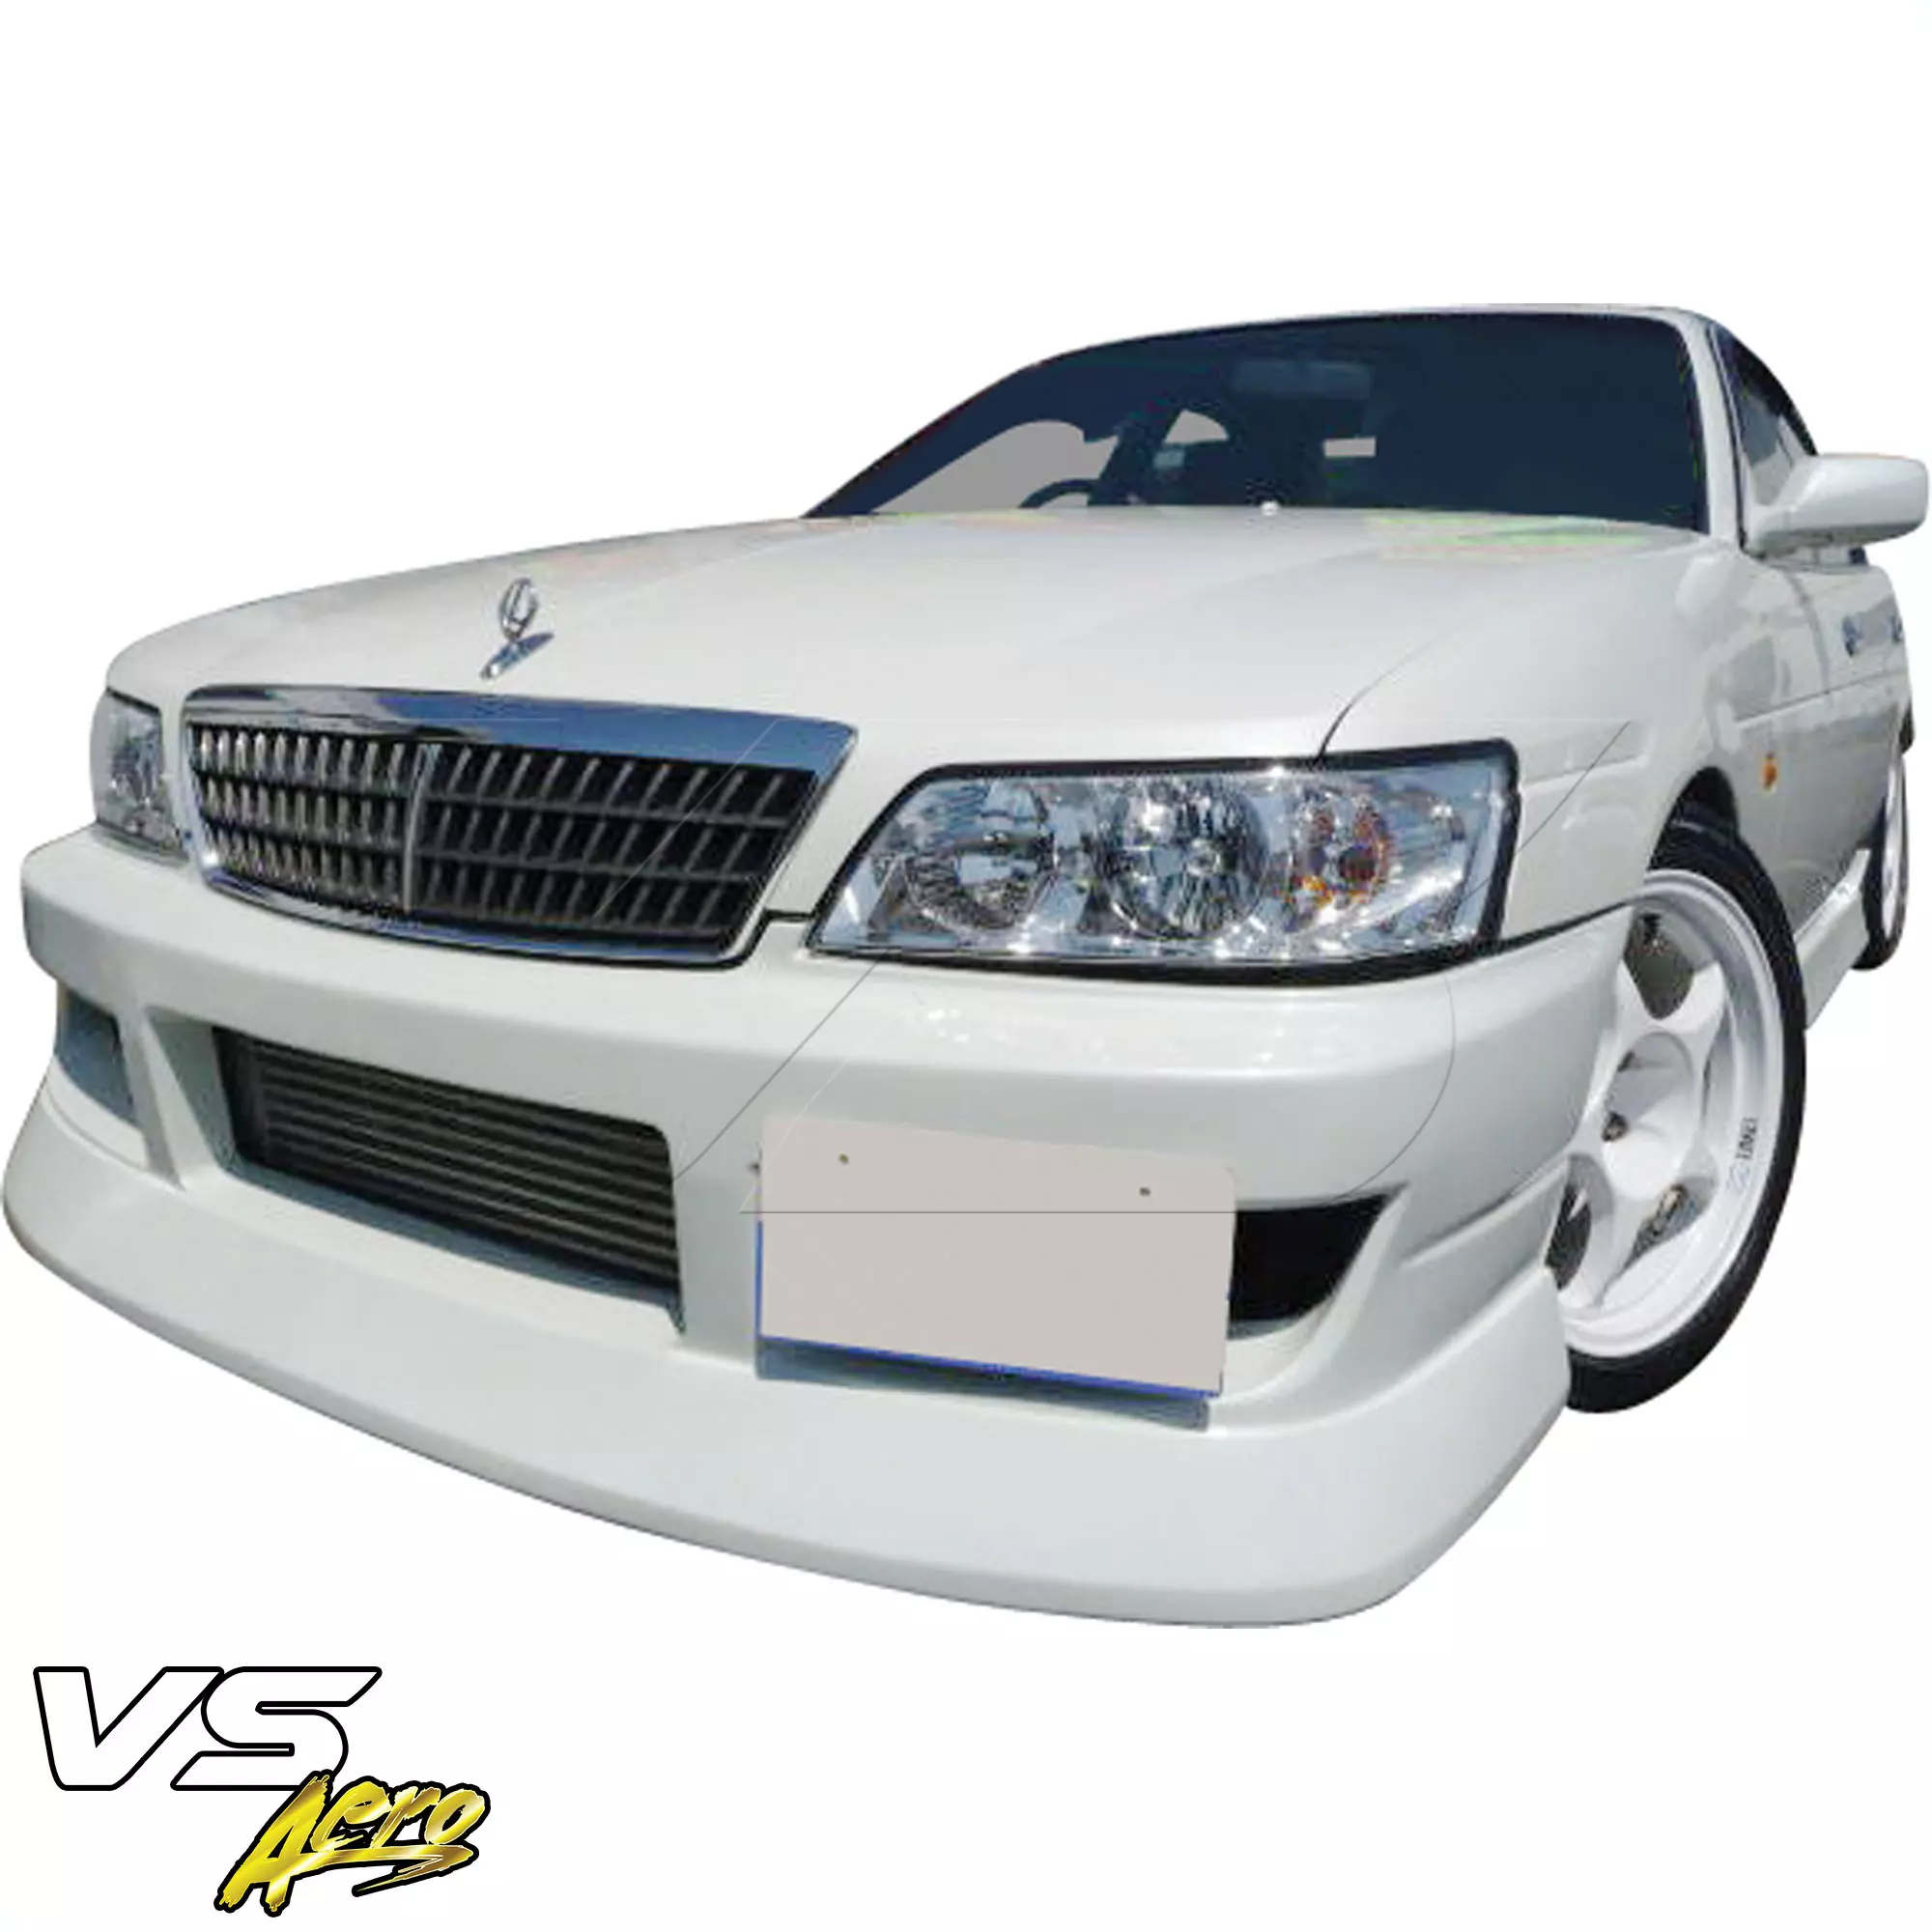 VSaero FRP FKON Body Kit 4pc (early model) > Nissan Laurel C35 1998-2002 - Image 5